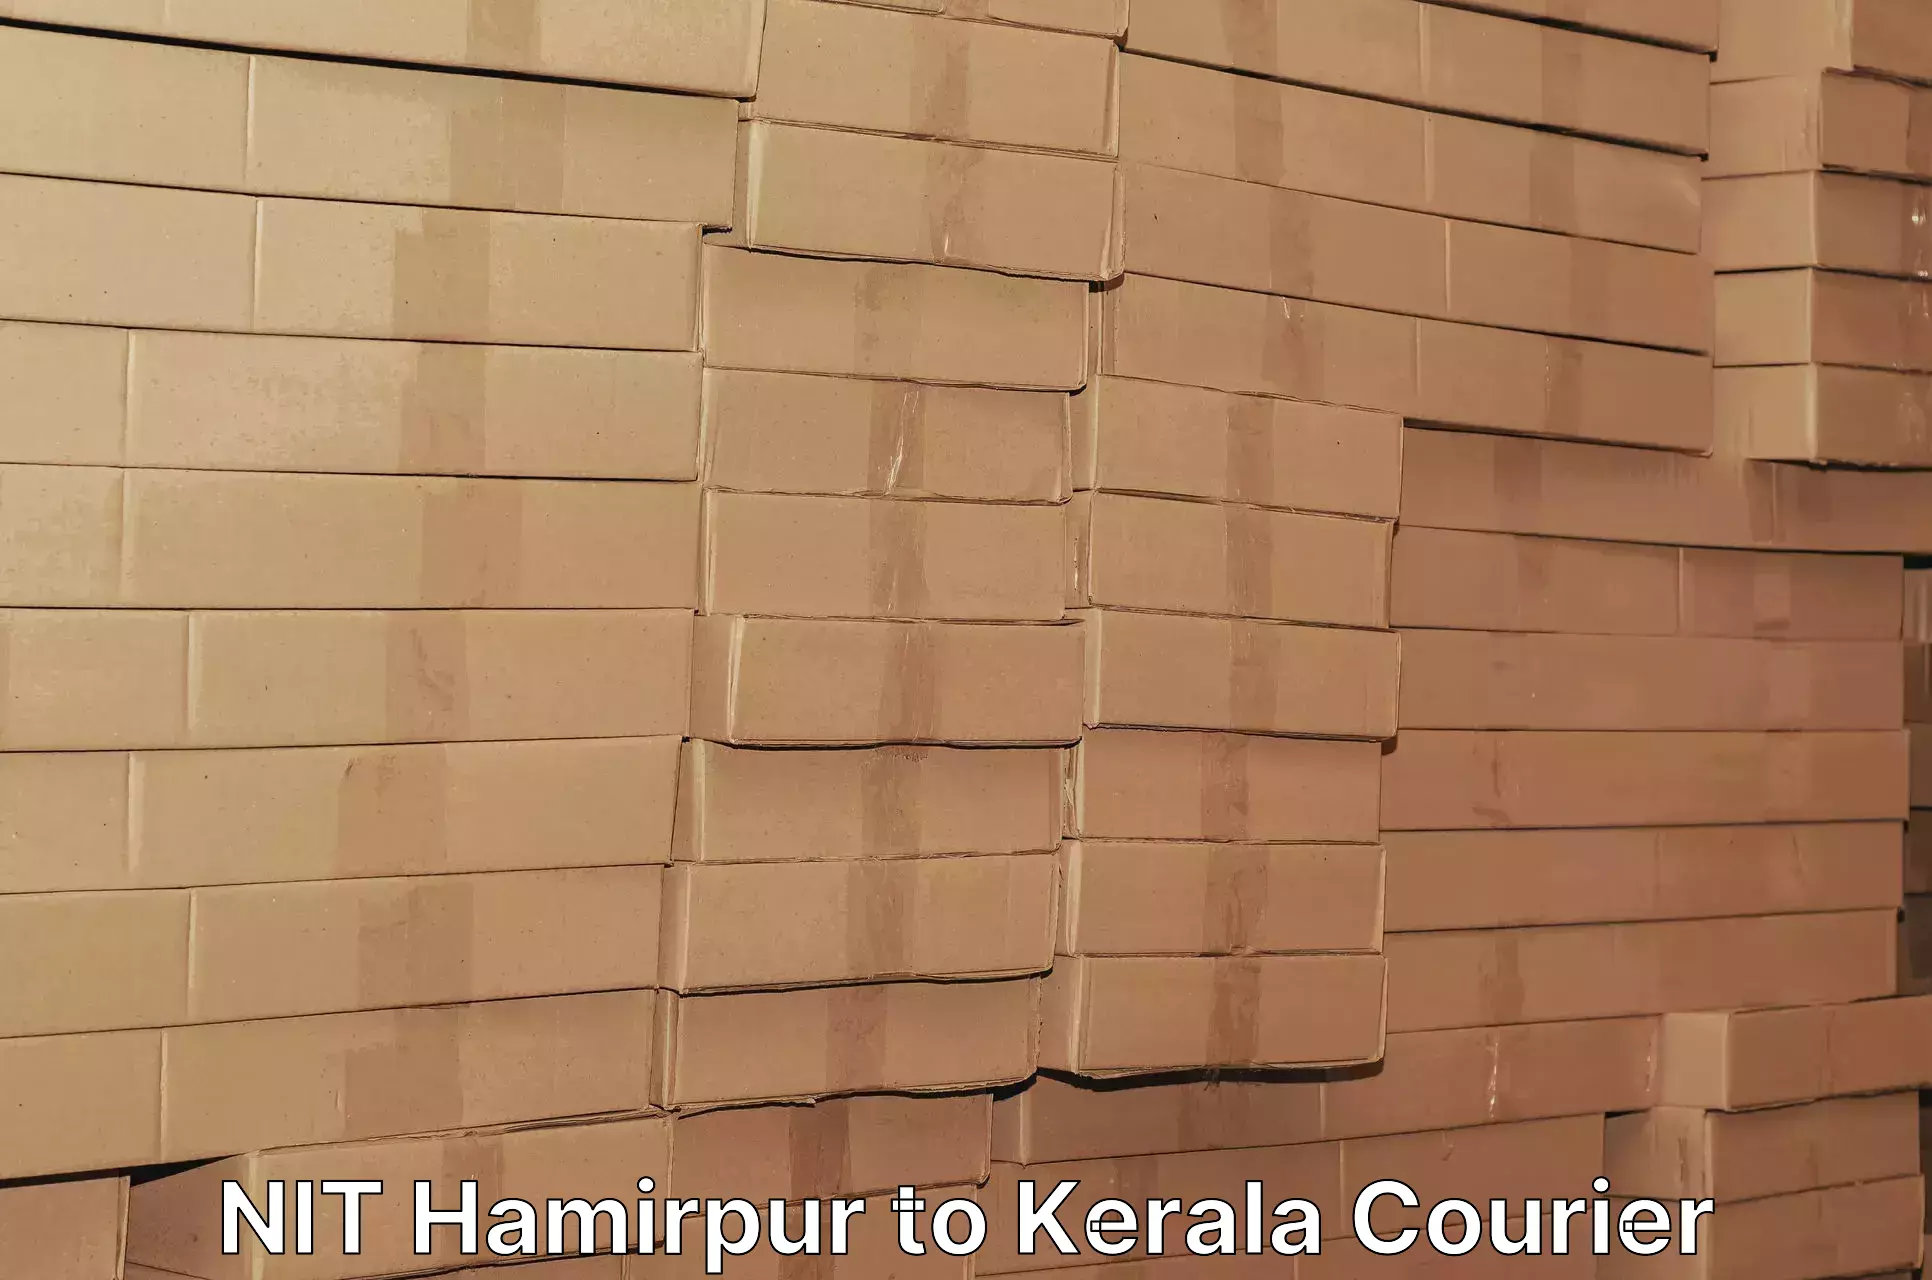 Courier service booking NIT Hamirpur to Nilambur